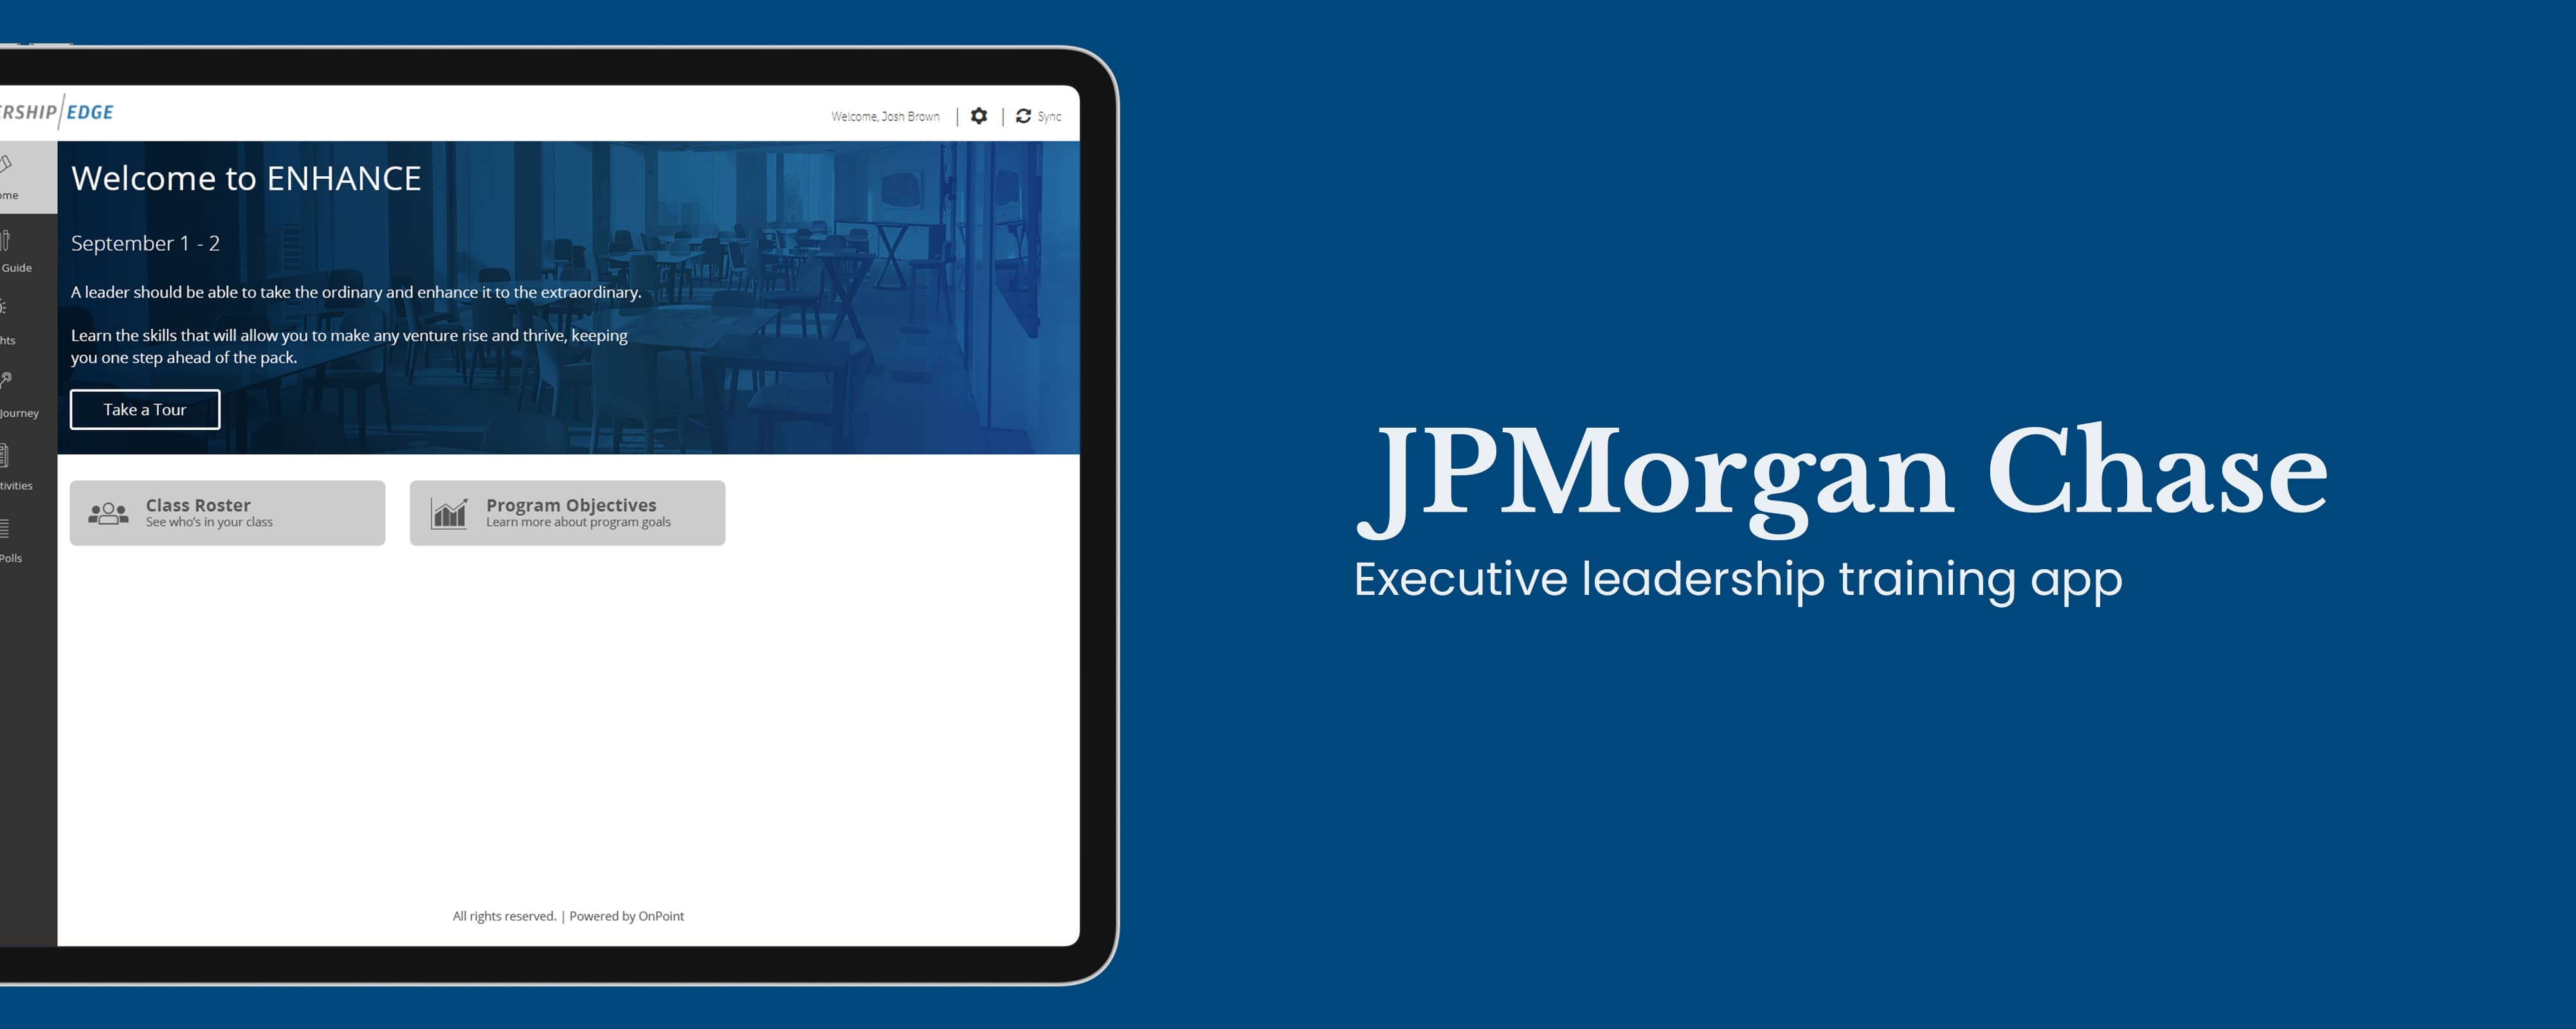 JPMorgan Chase: Executive leadership training app